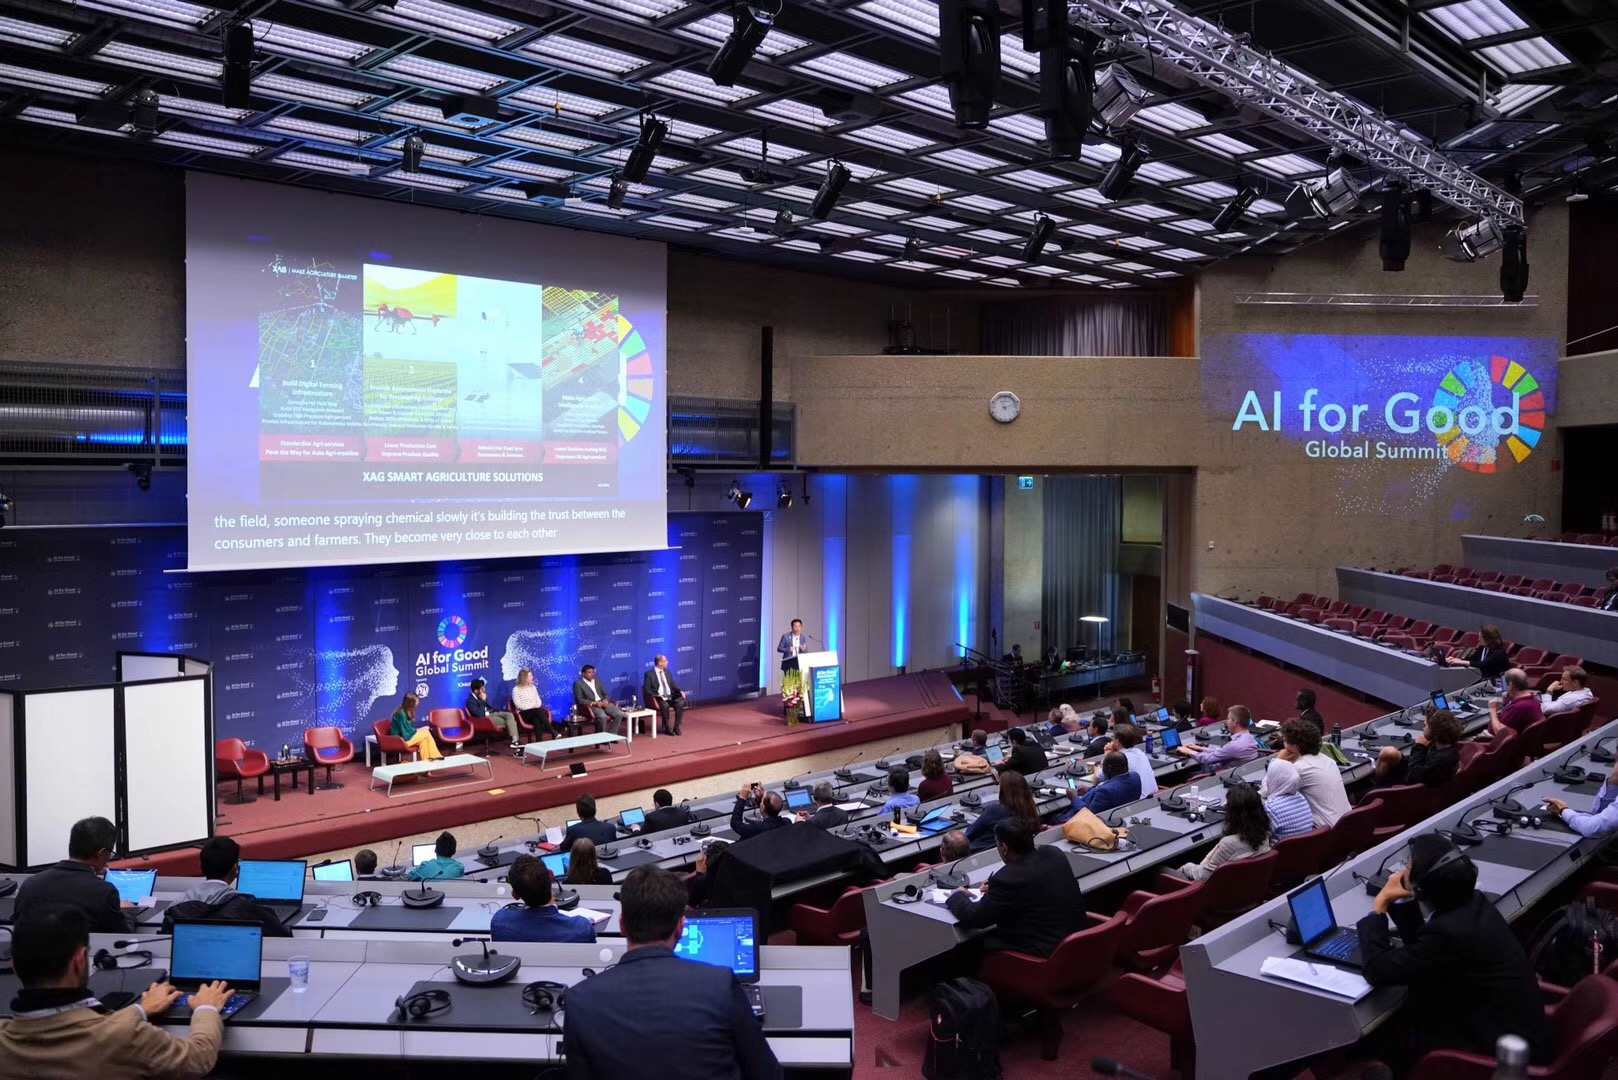 AI for Good Global Summit